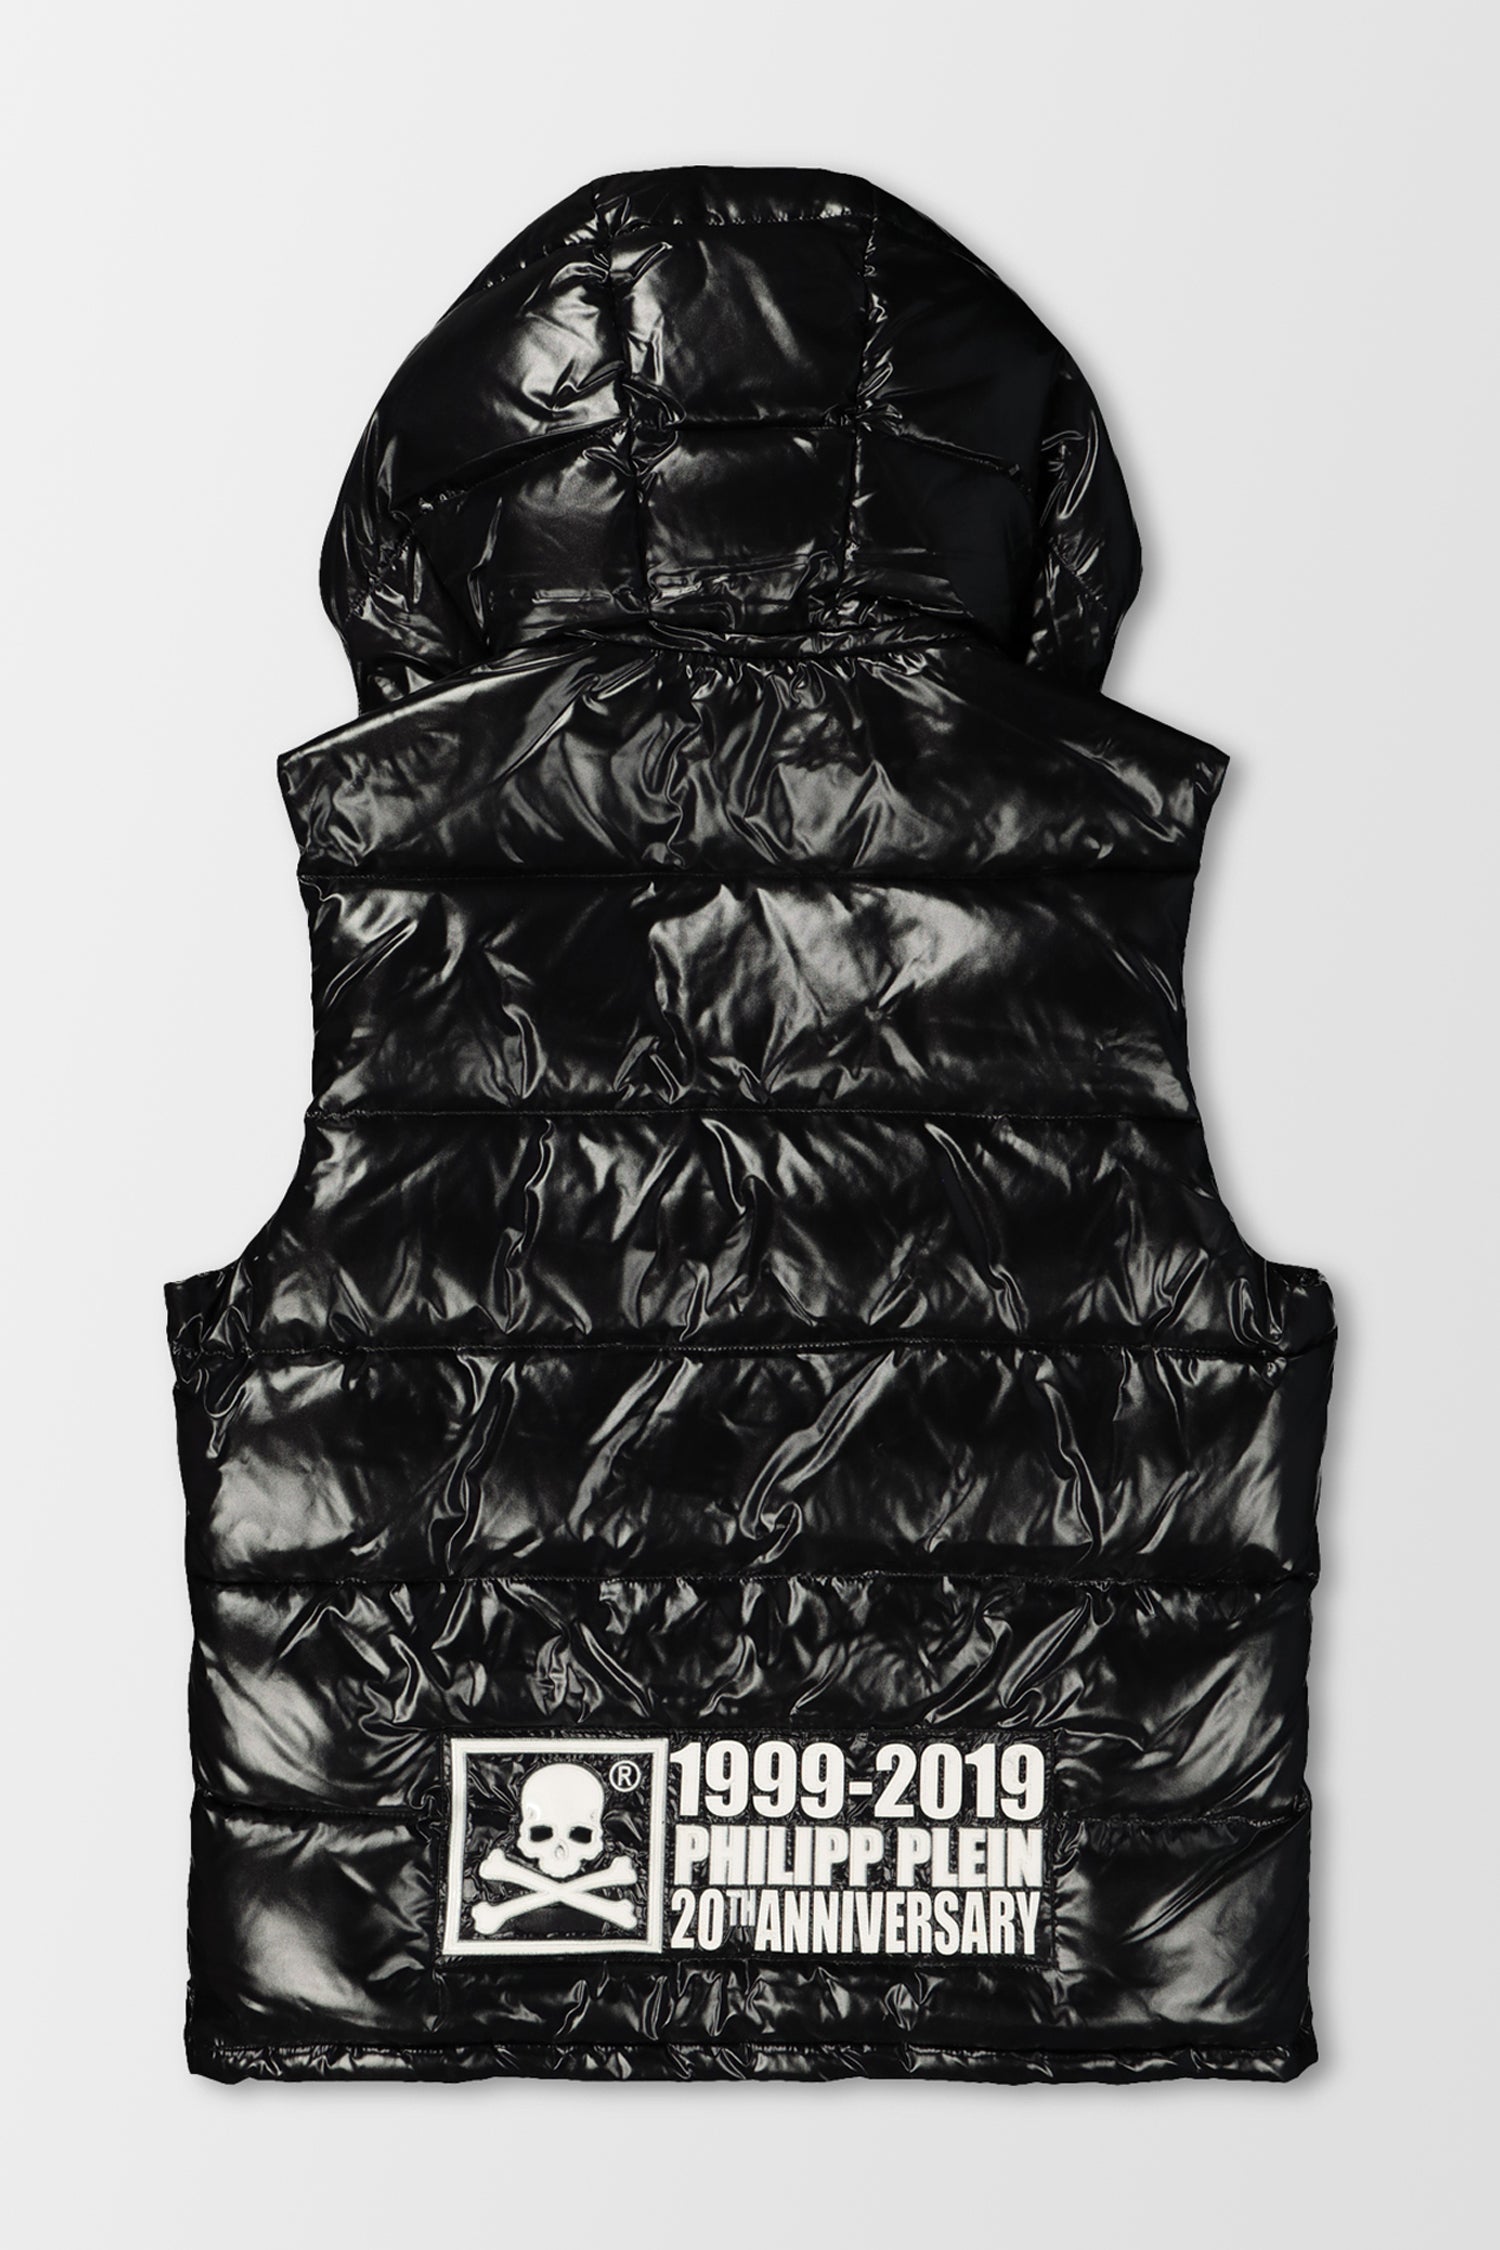 Philipp Plein 20th Anniversary Vest